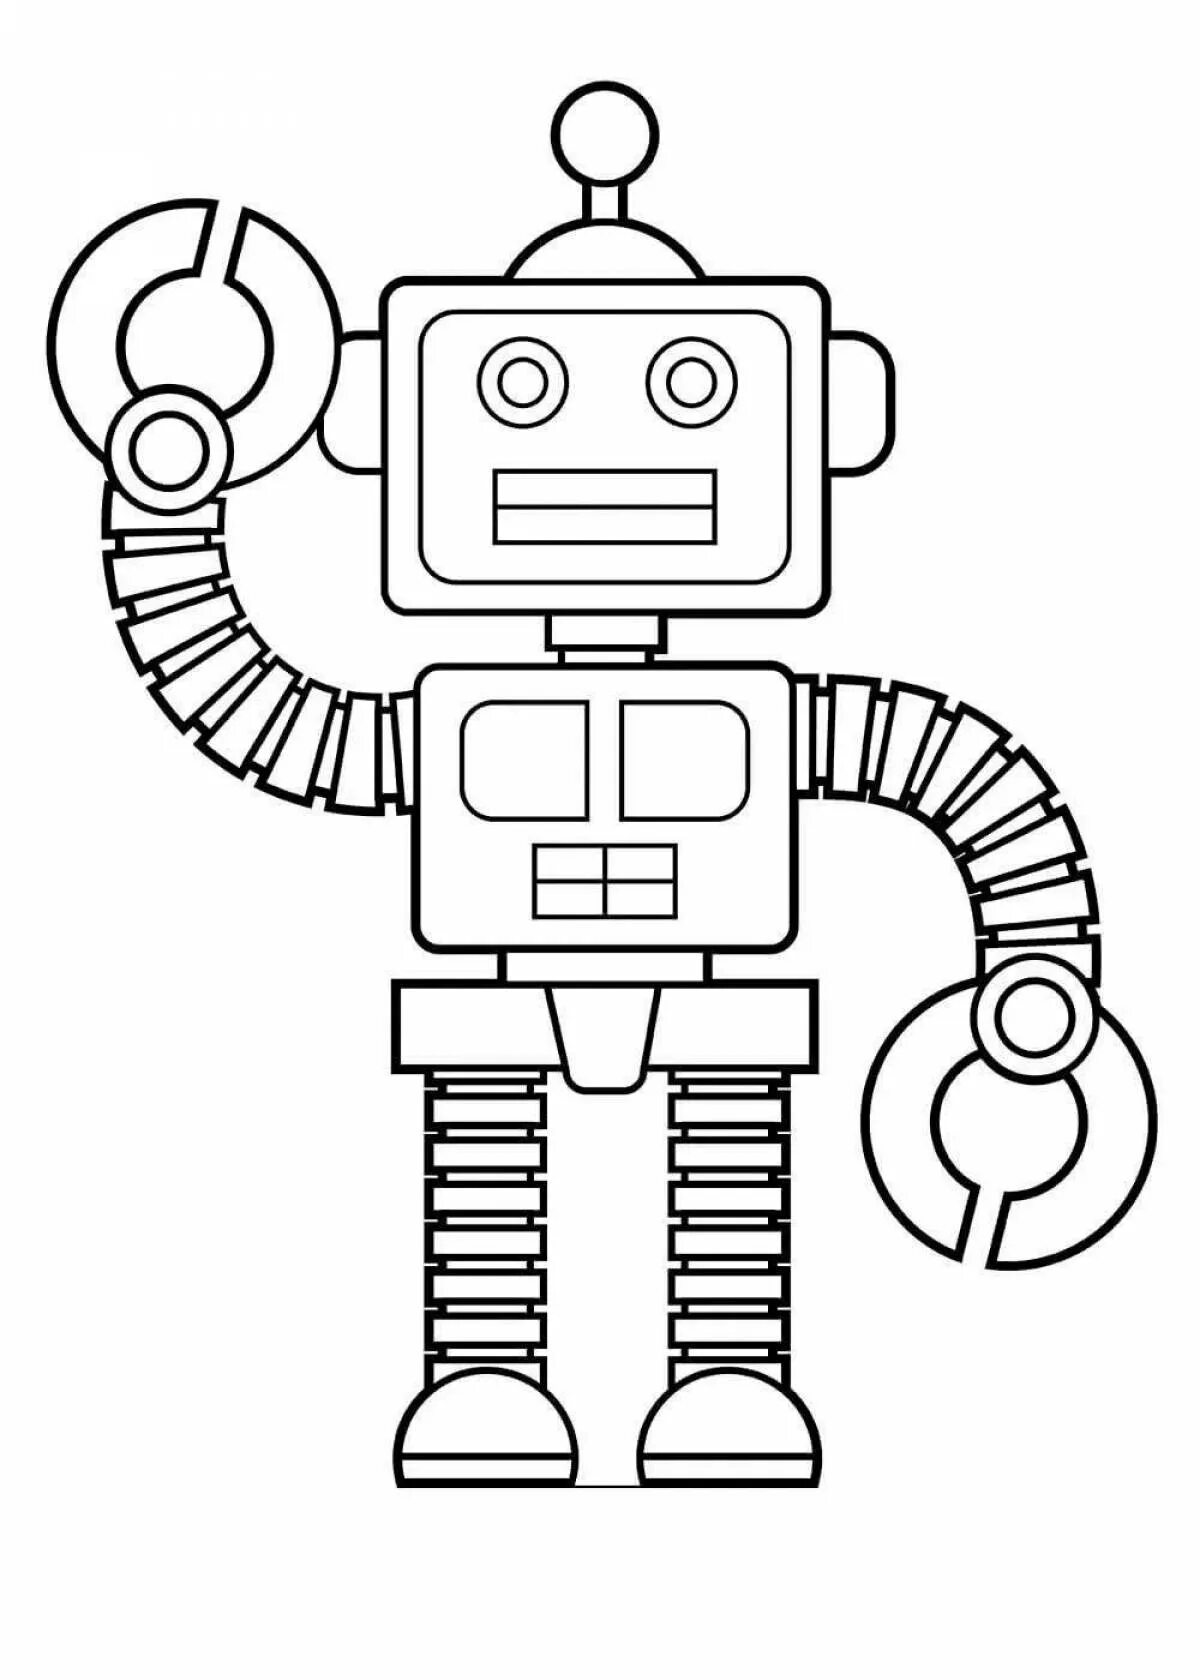 Раскраска робота 3. Раскраски. Роботы. Тоботы. Раскраска. Робот раскраска для детей. Робот раскраска печать.